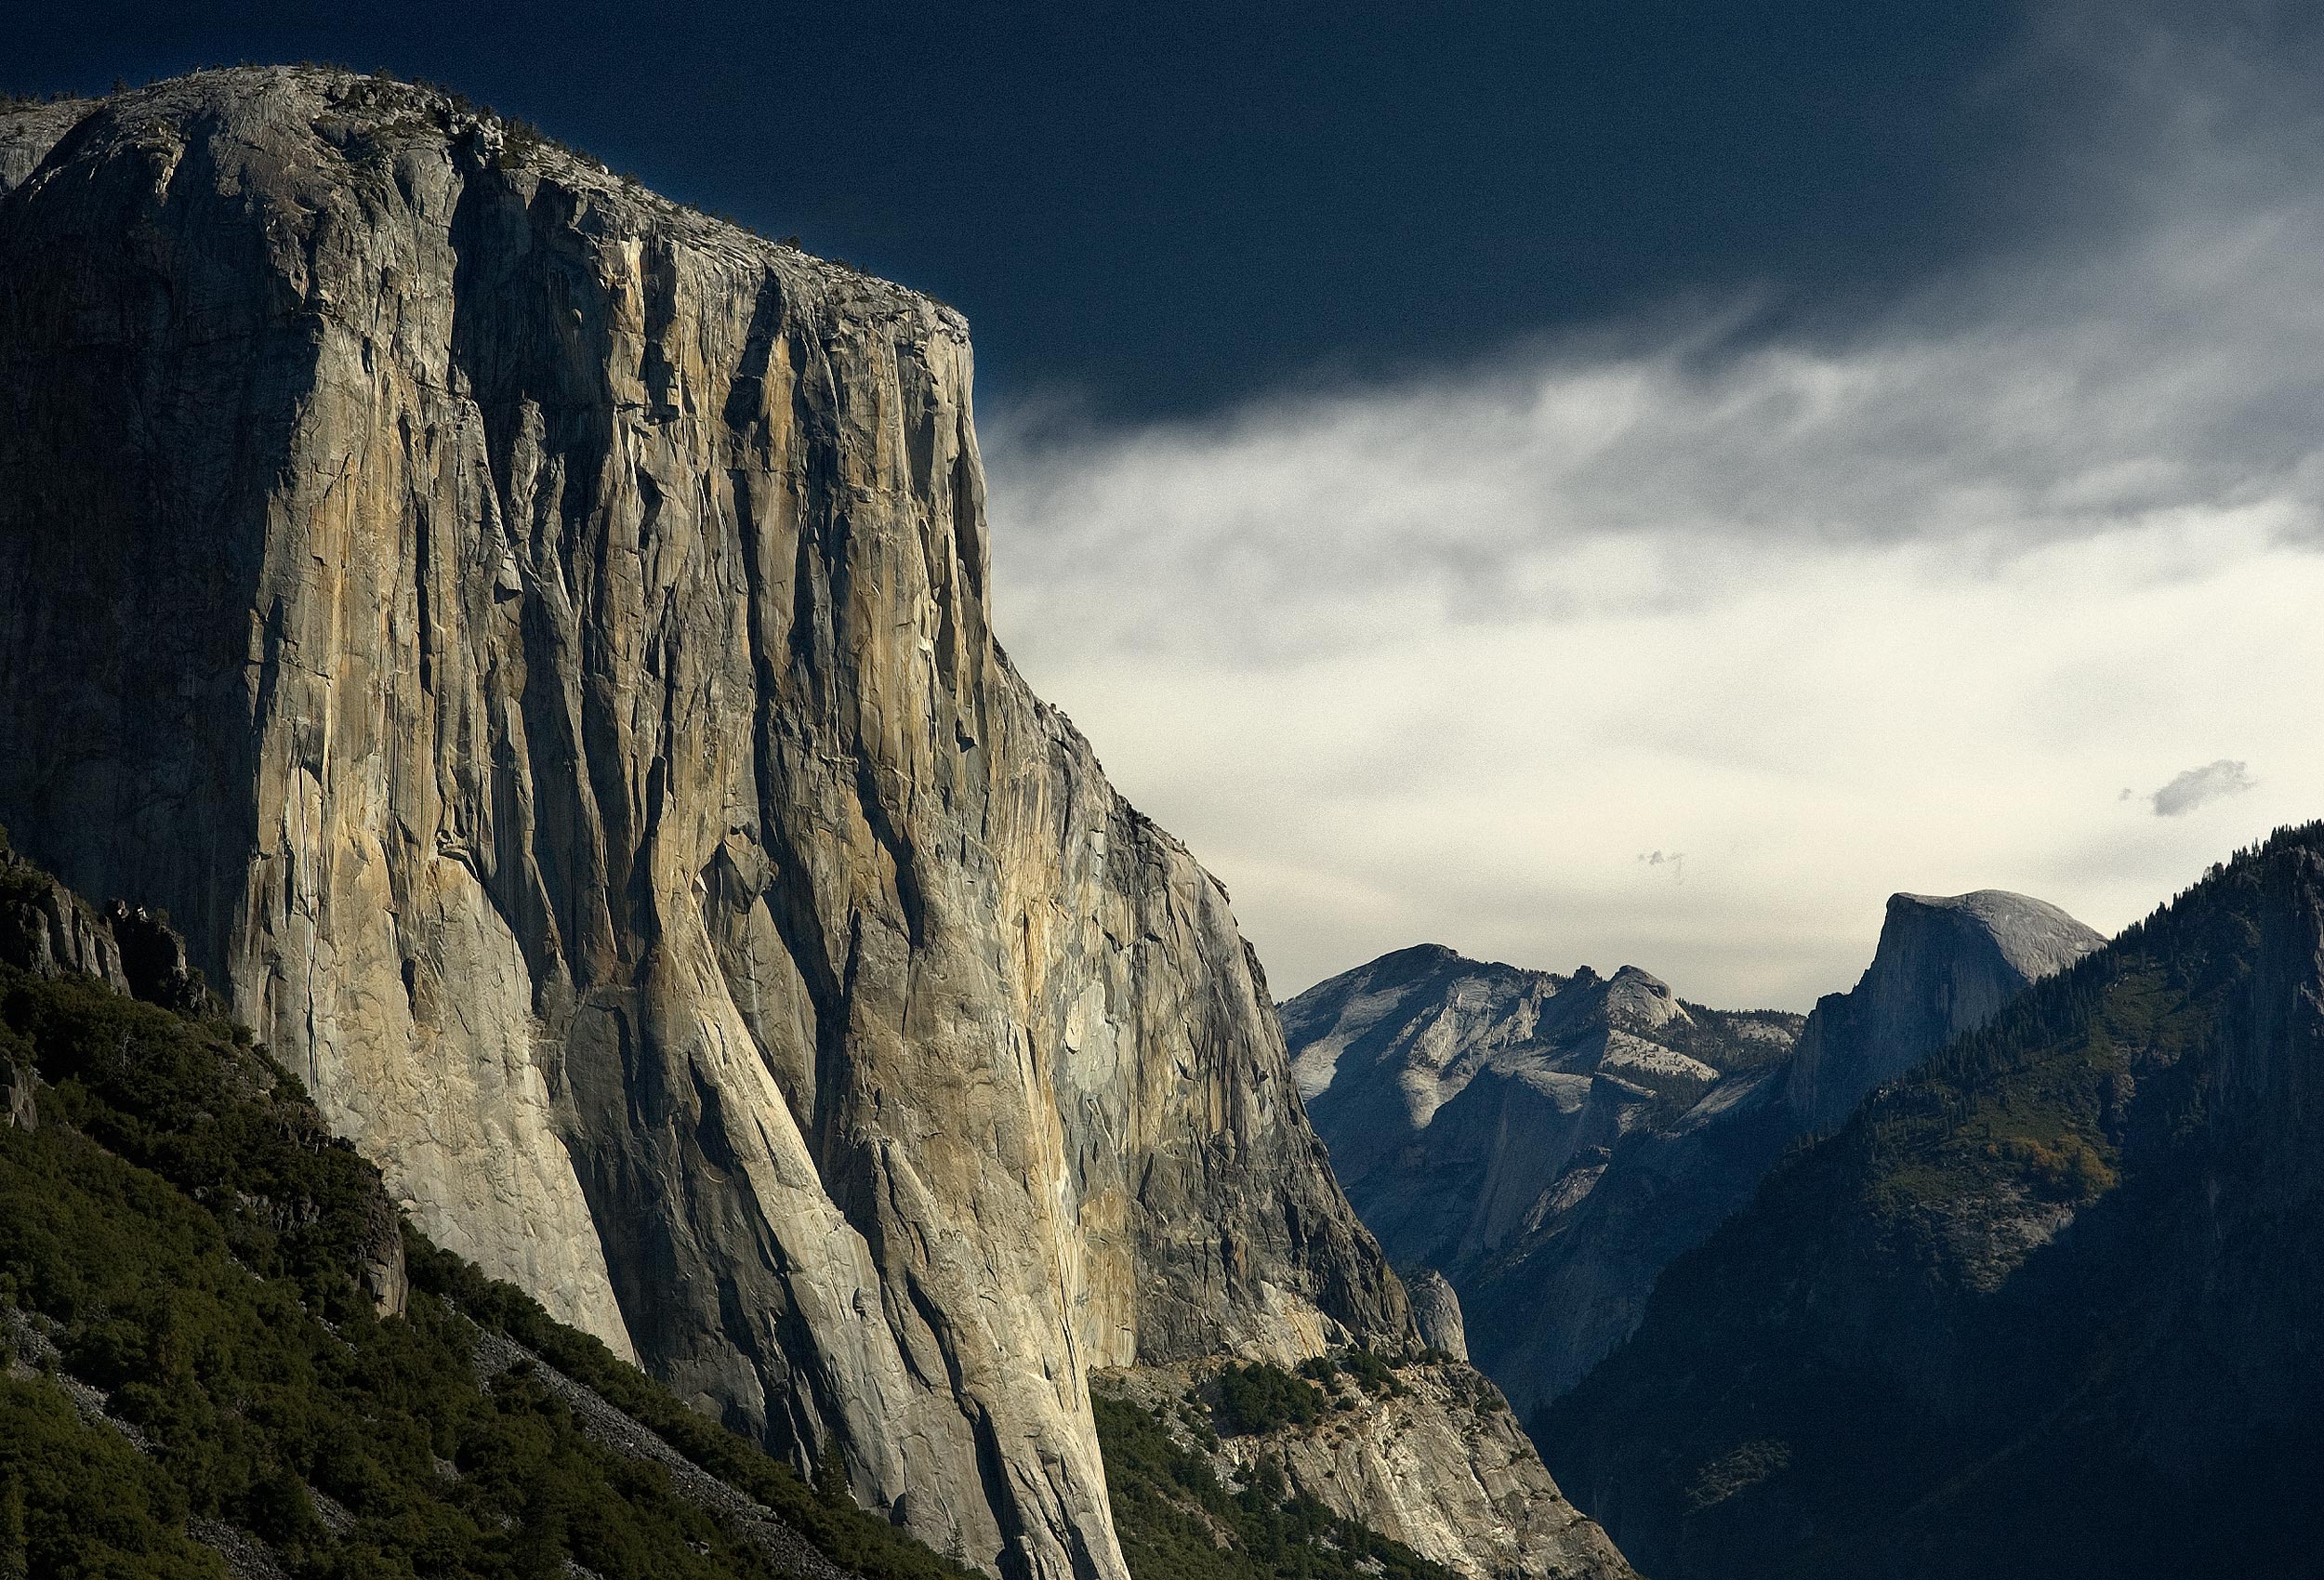 El Capitan by landscape photographer Kristopher Grunert